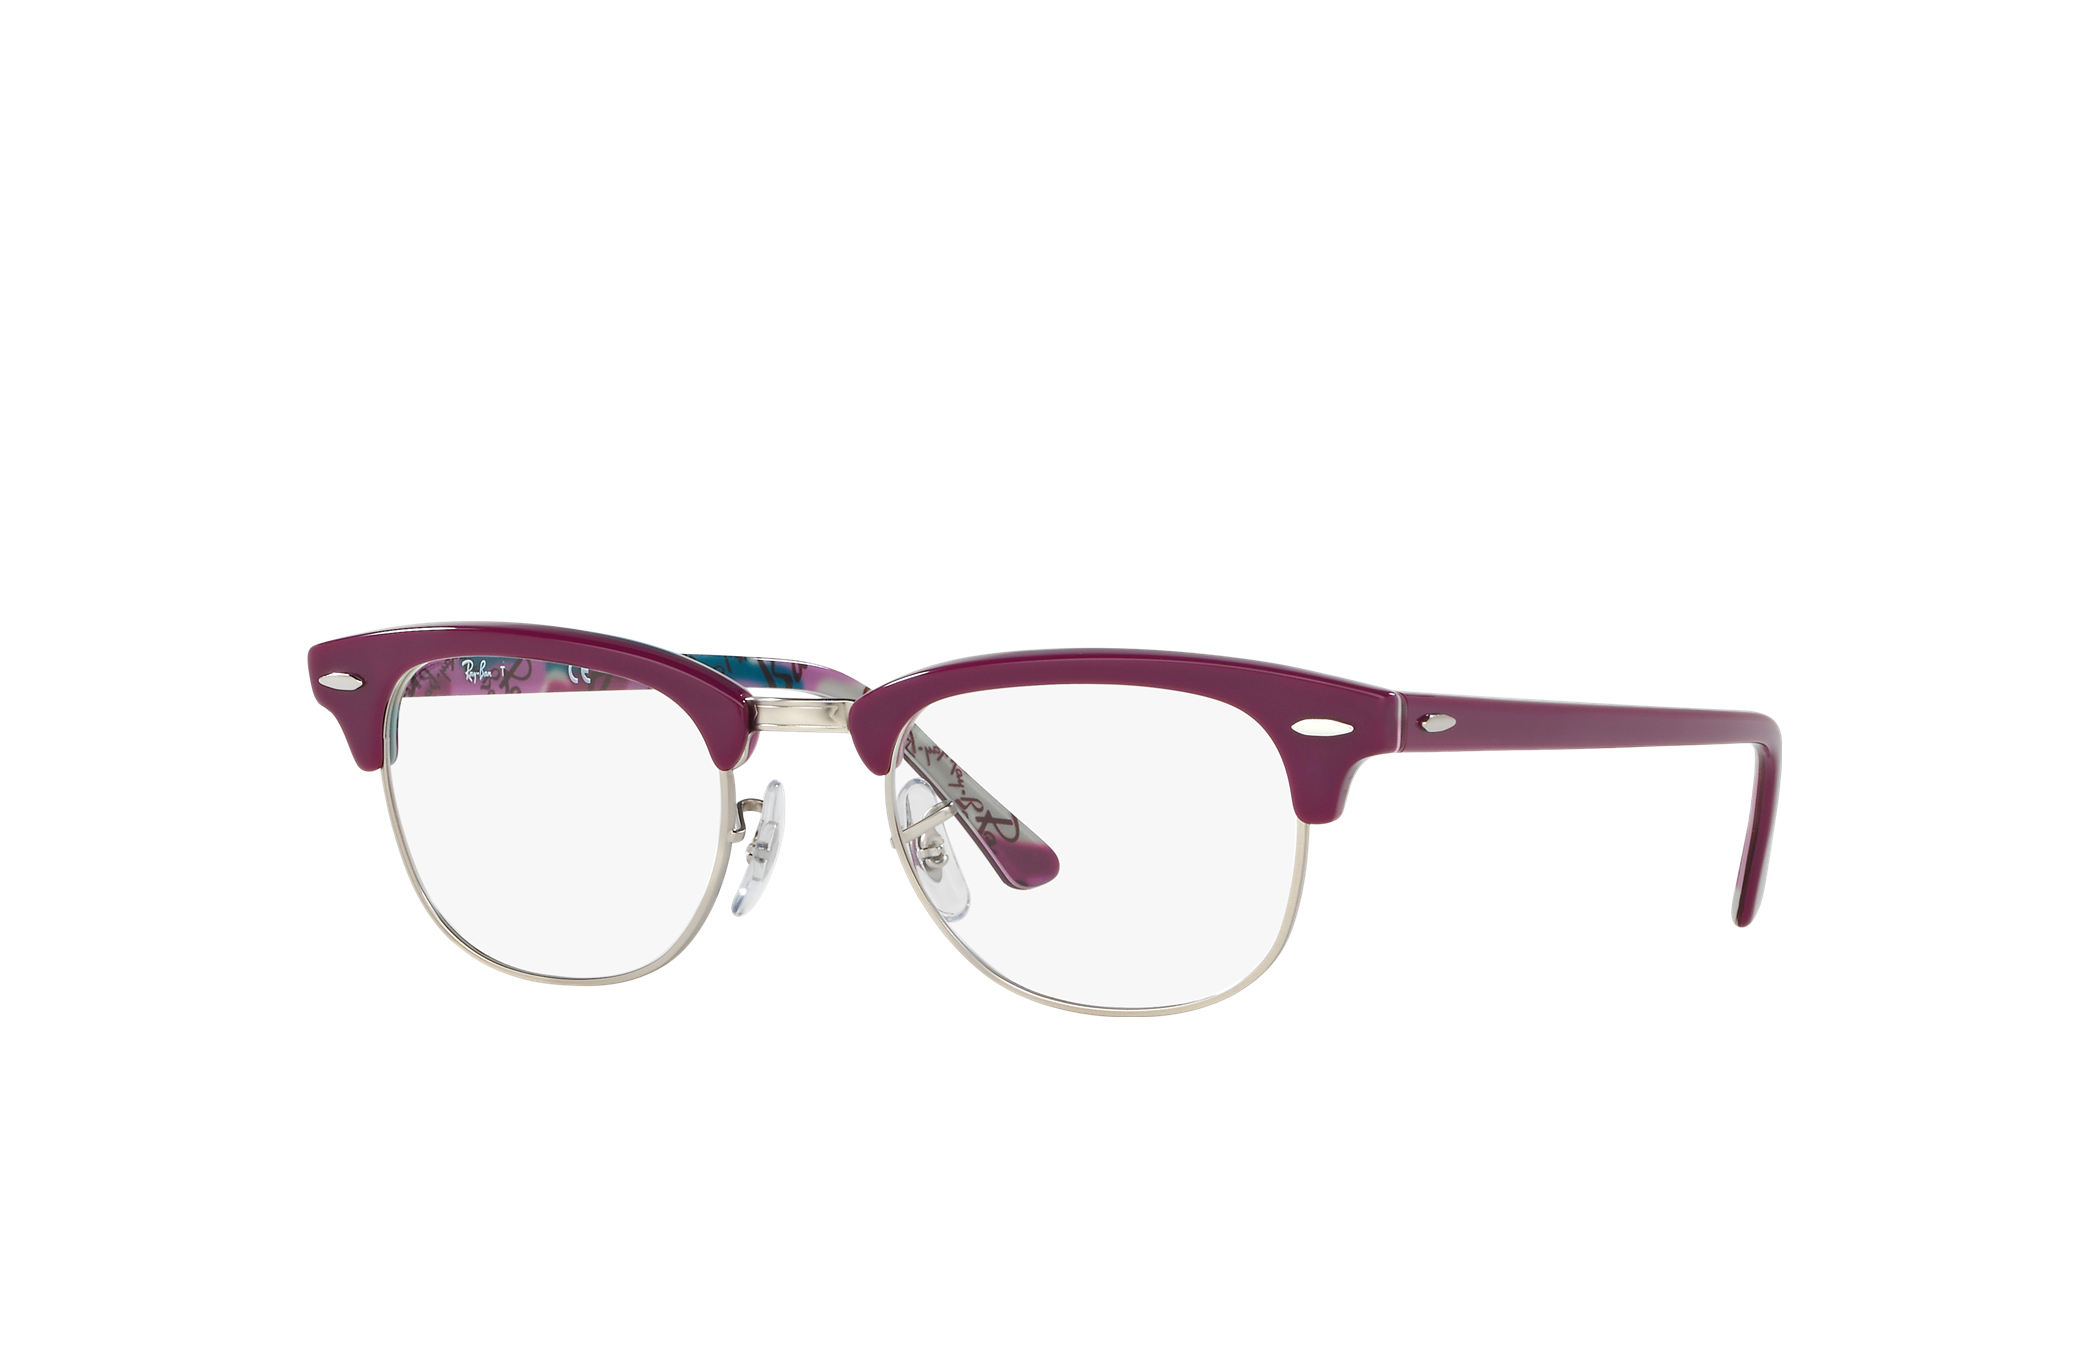 purple ray bans eyeglasses